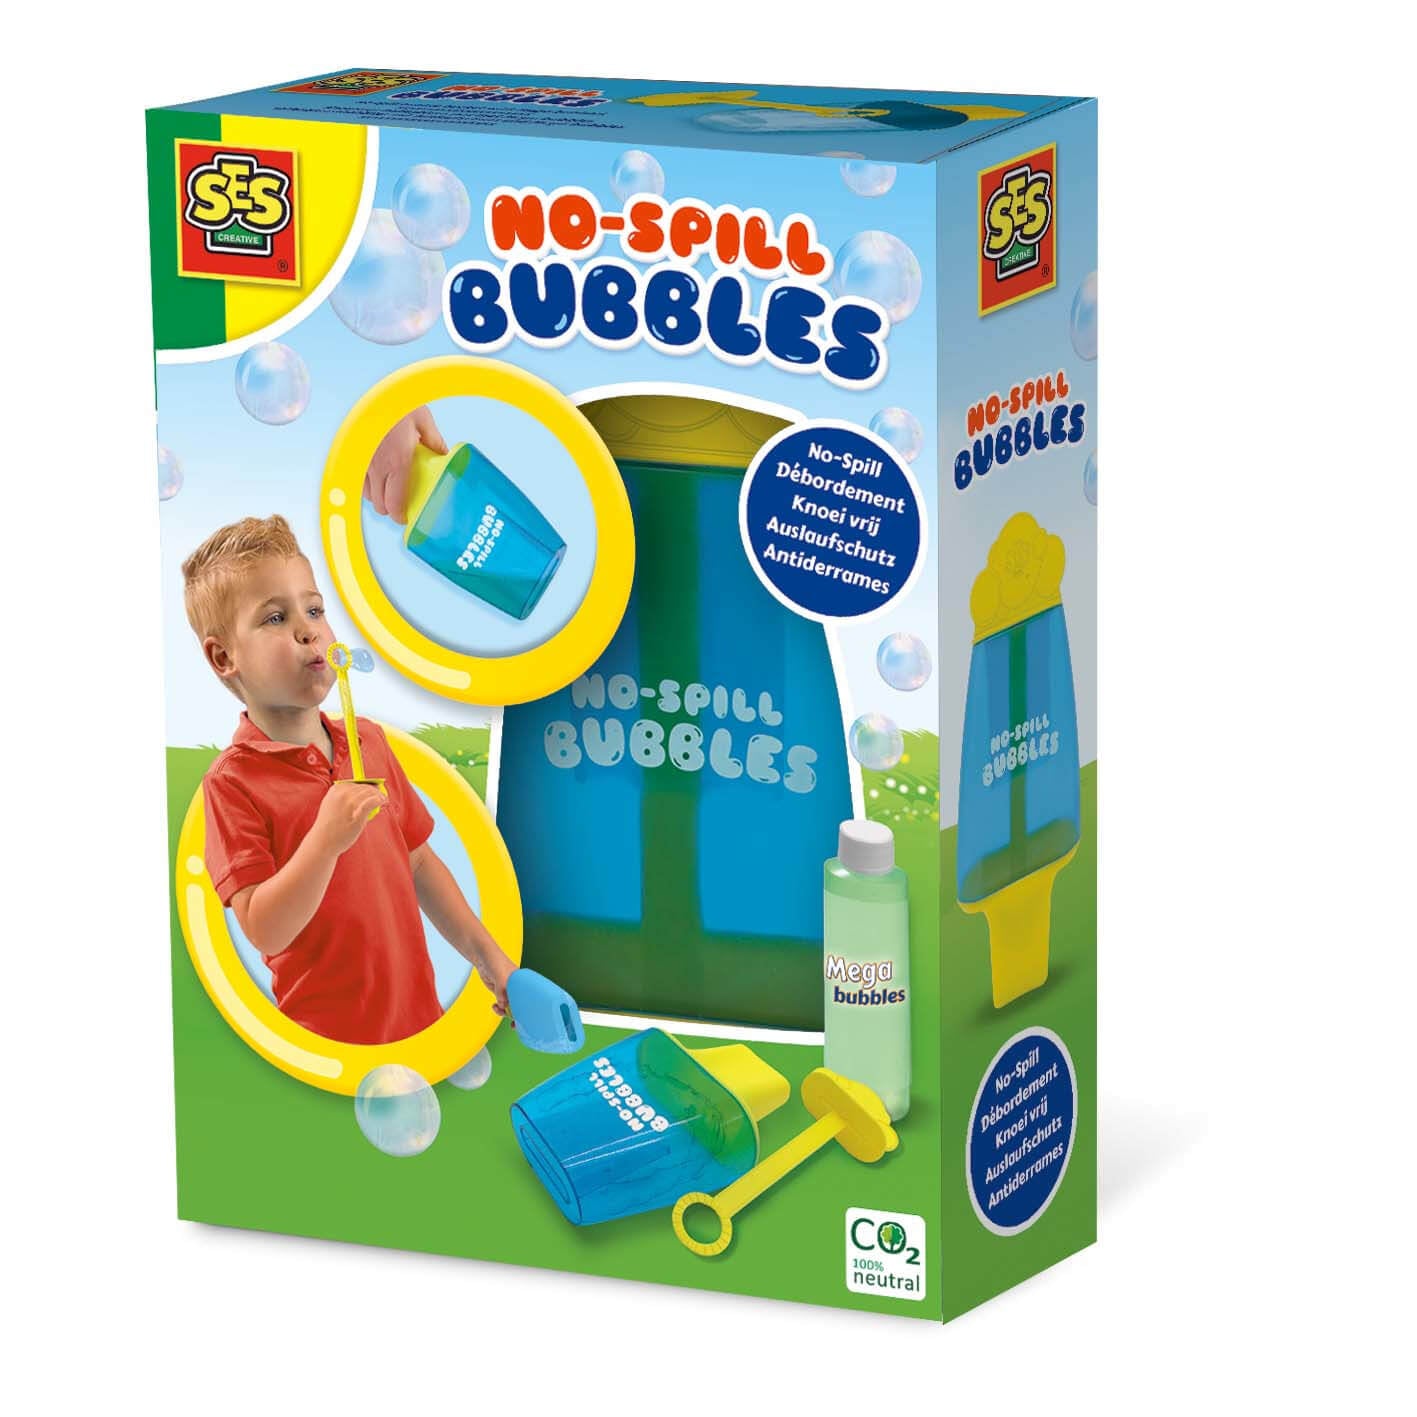 No-spill bubble bucket with Mega bubbles